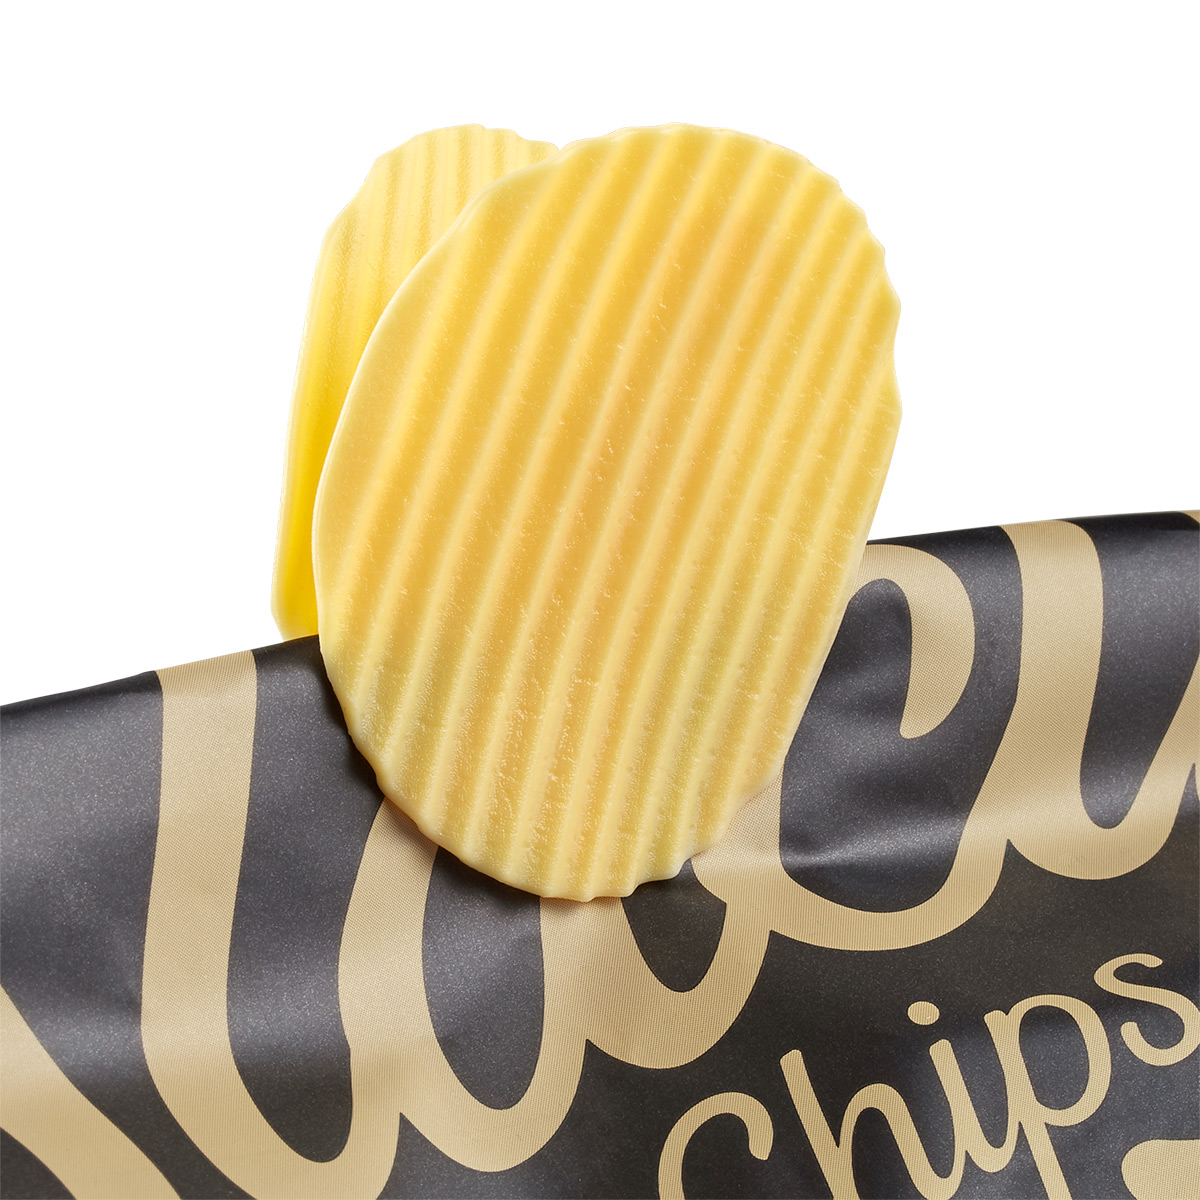 Chip Clips - Potato Clips